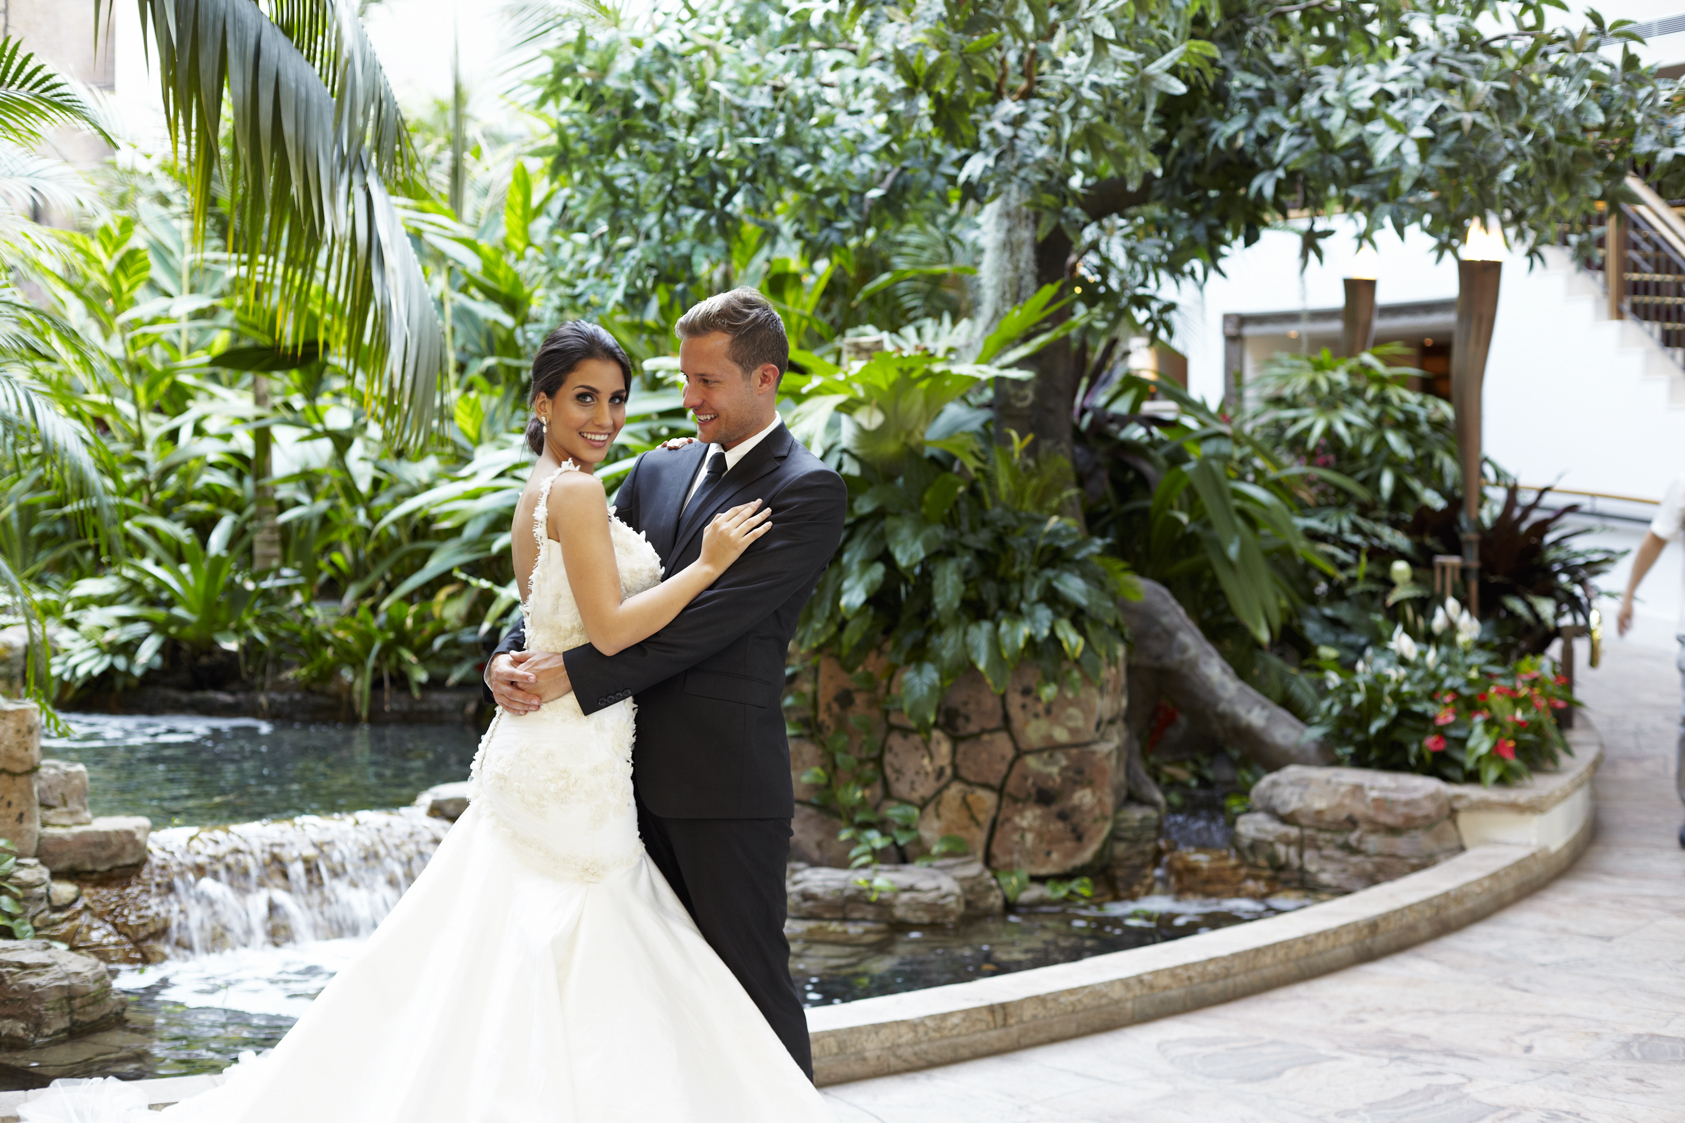 Happy married couple posing in front of indoor water feature